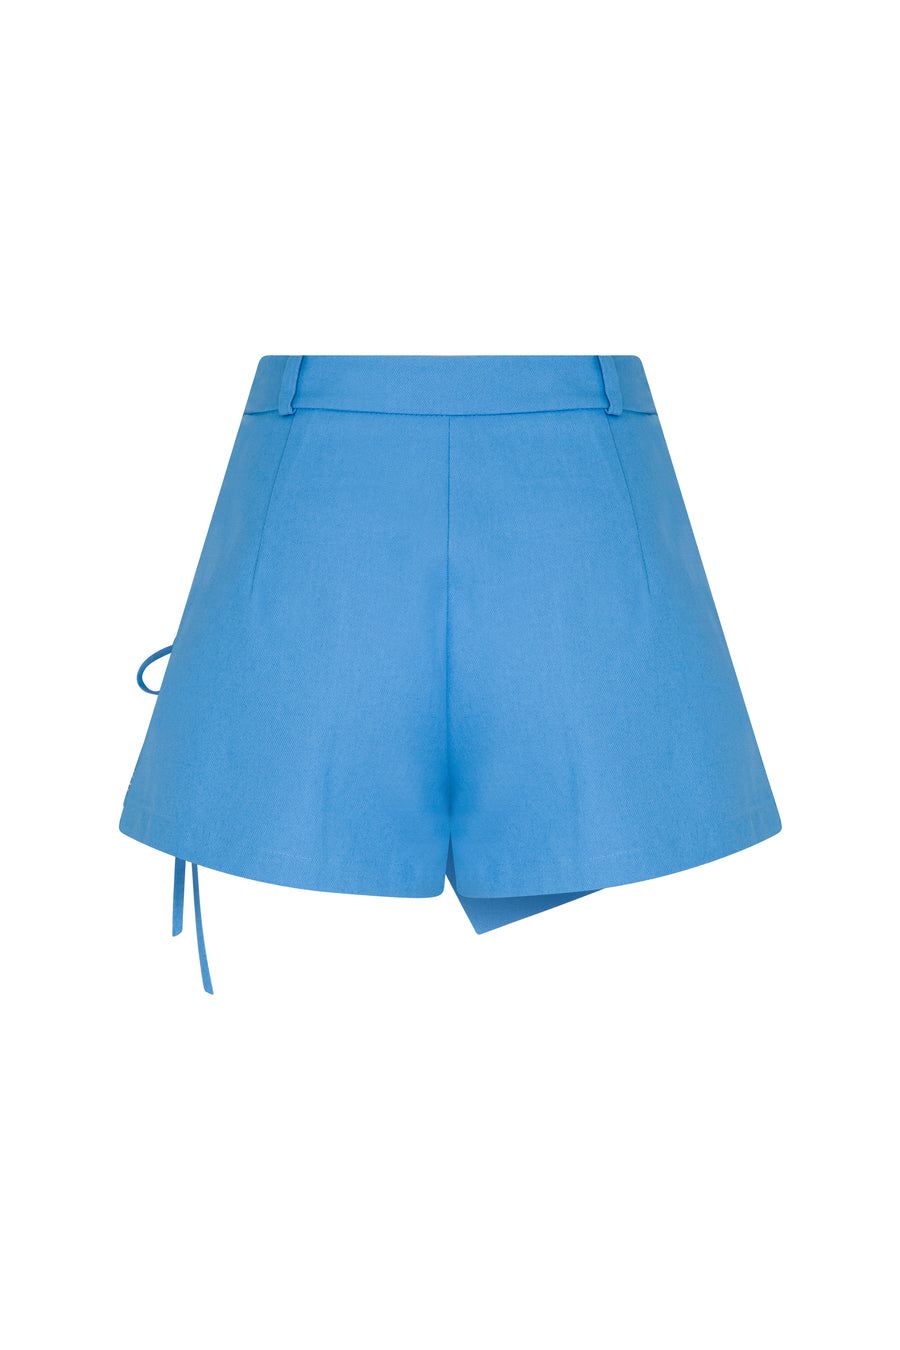 Holly Shorts Skirt